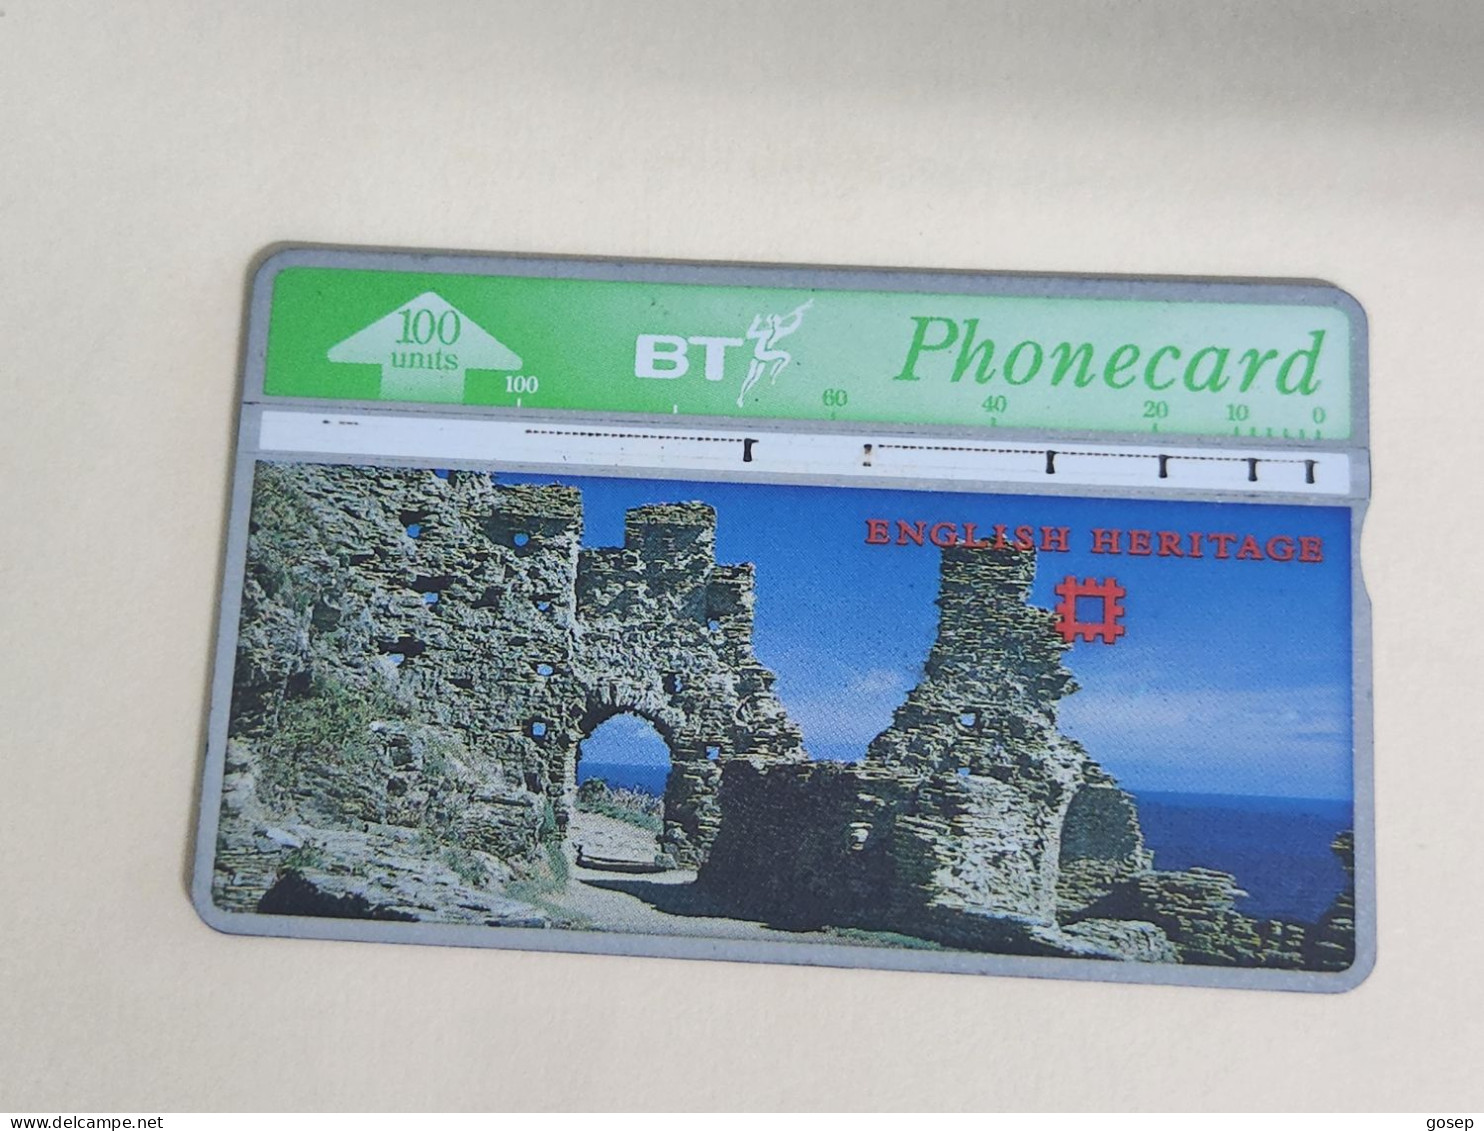 United Kingdom-(BTA121)-HERITAGE-Tintalgel Castle-(209)(100units)(527H03606)price Cataloge3.00£-used+1card Prepiad Free - BT Publicitaire Uitgaven